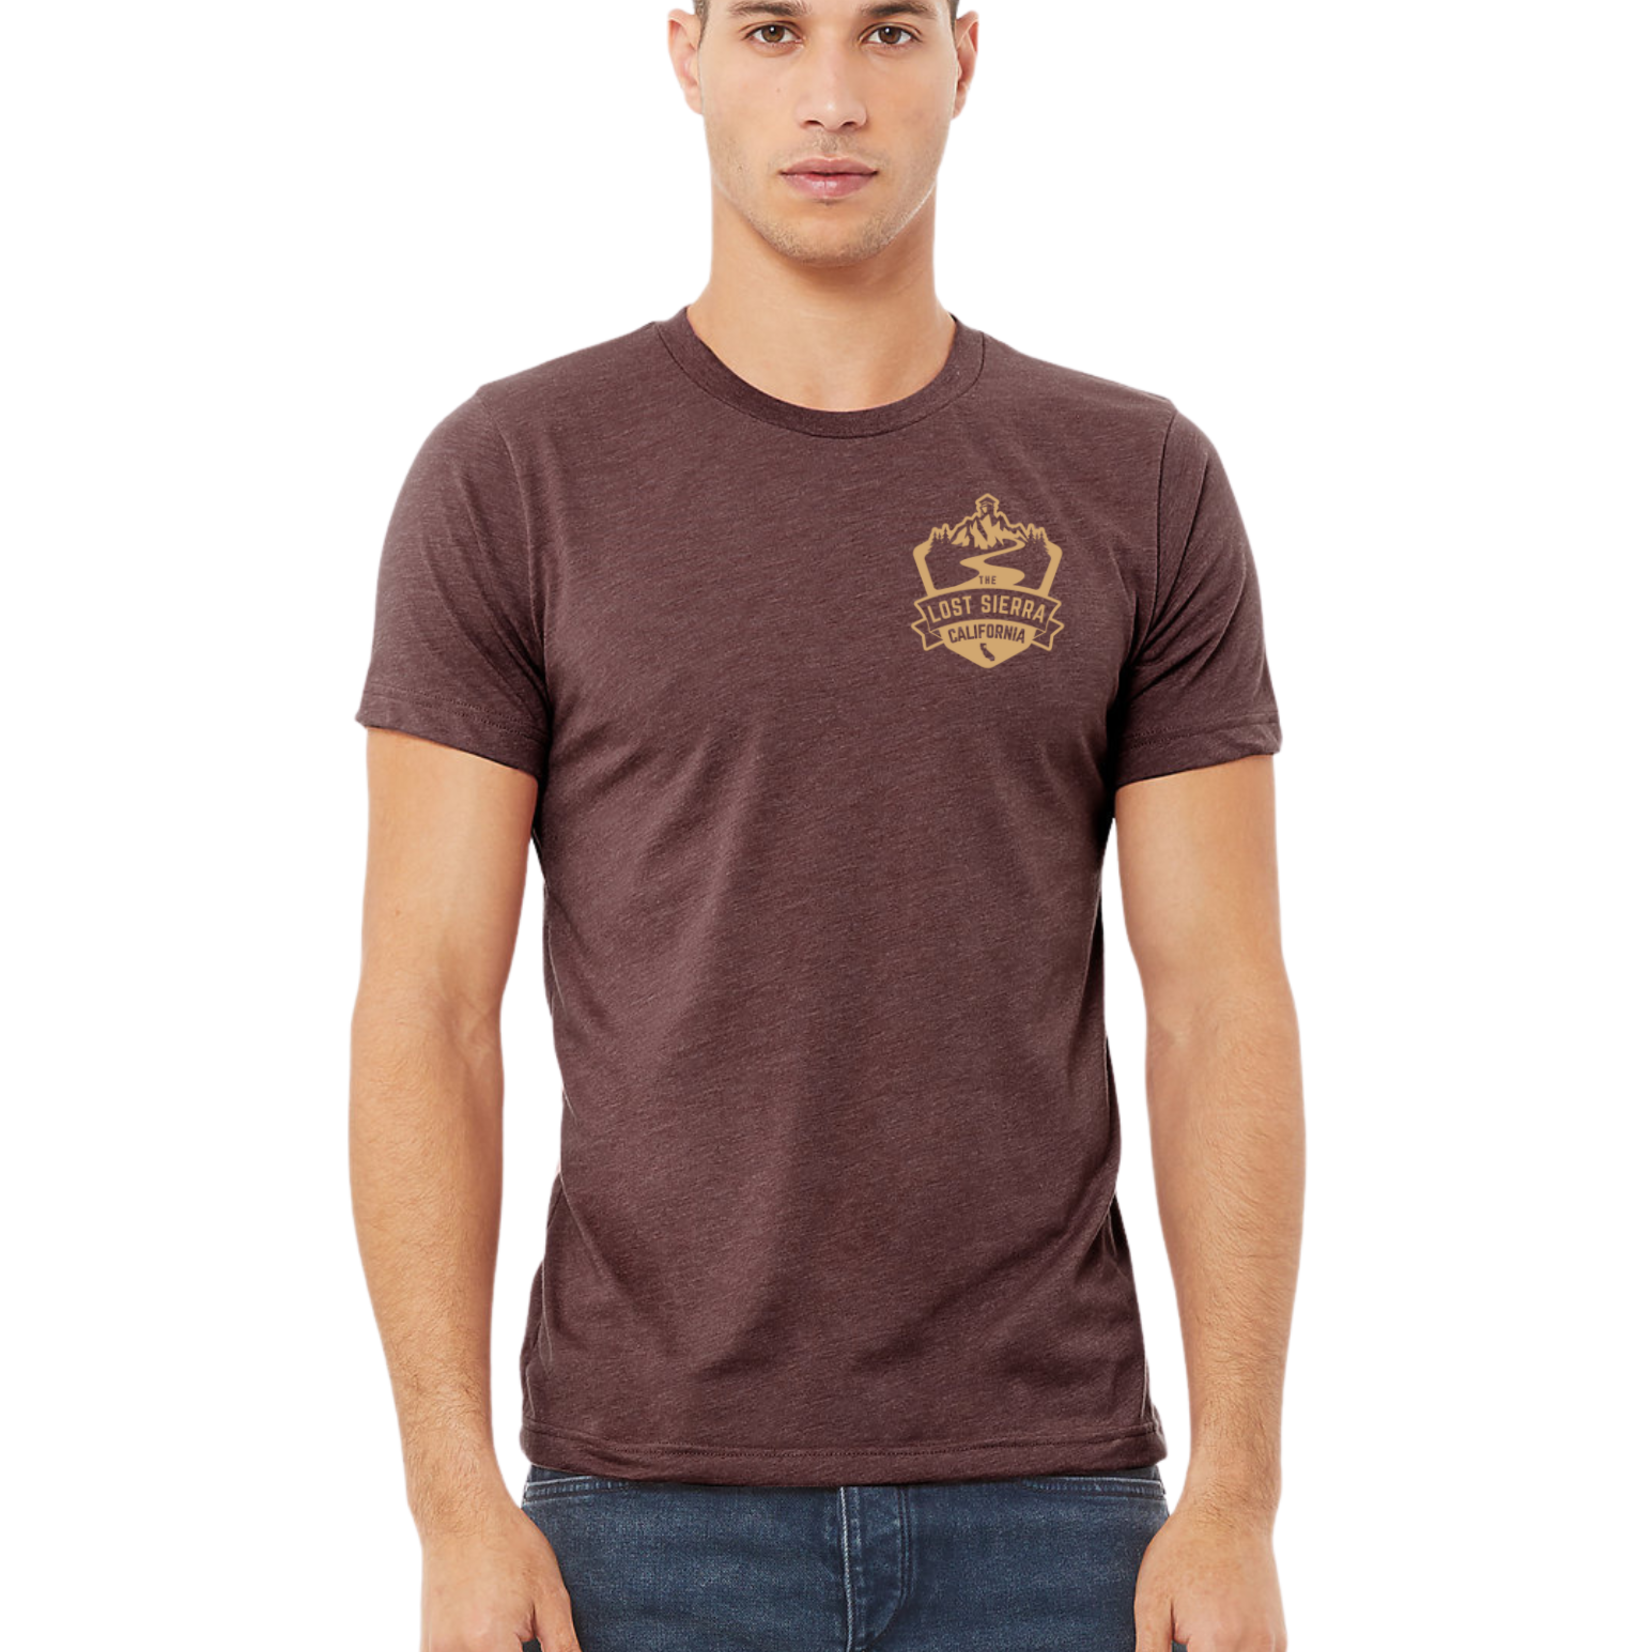 SHIRT - The Lost Sierra CA T-Shirt